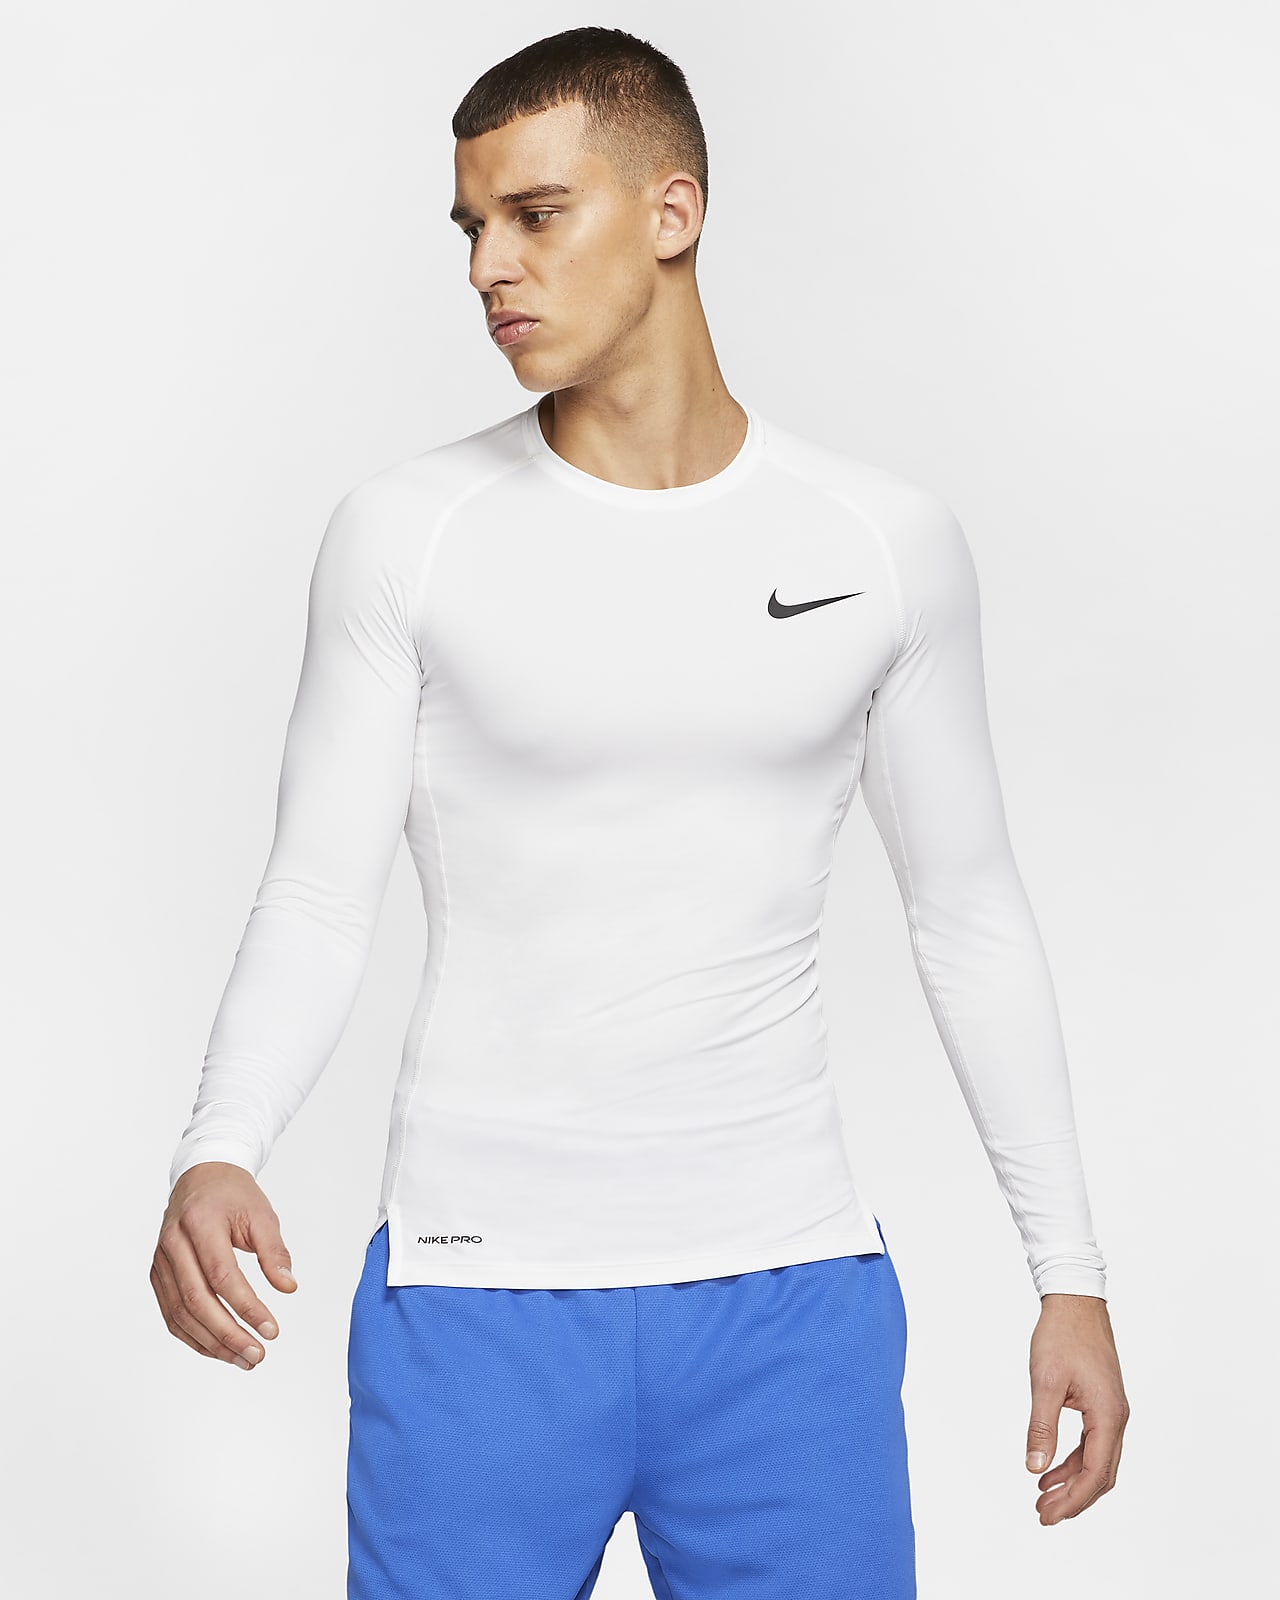 Tight-Fit Long-Sleeve Top. Nike EG